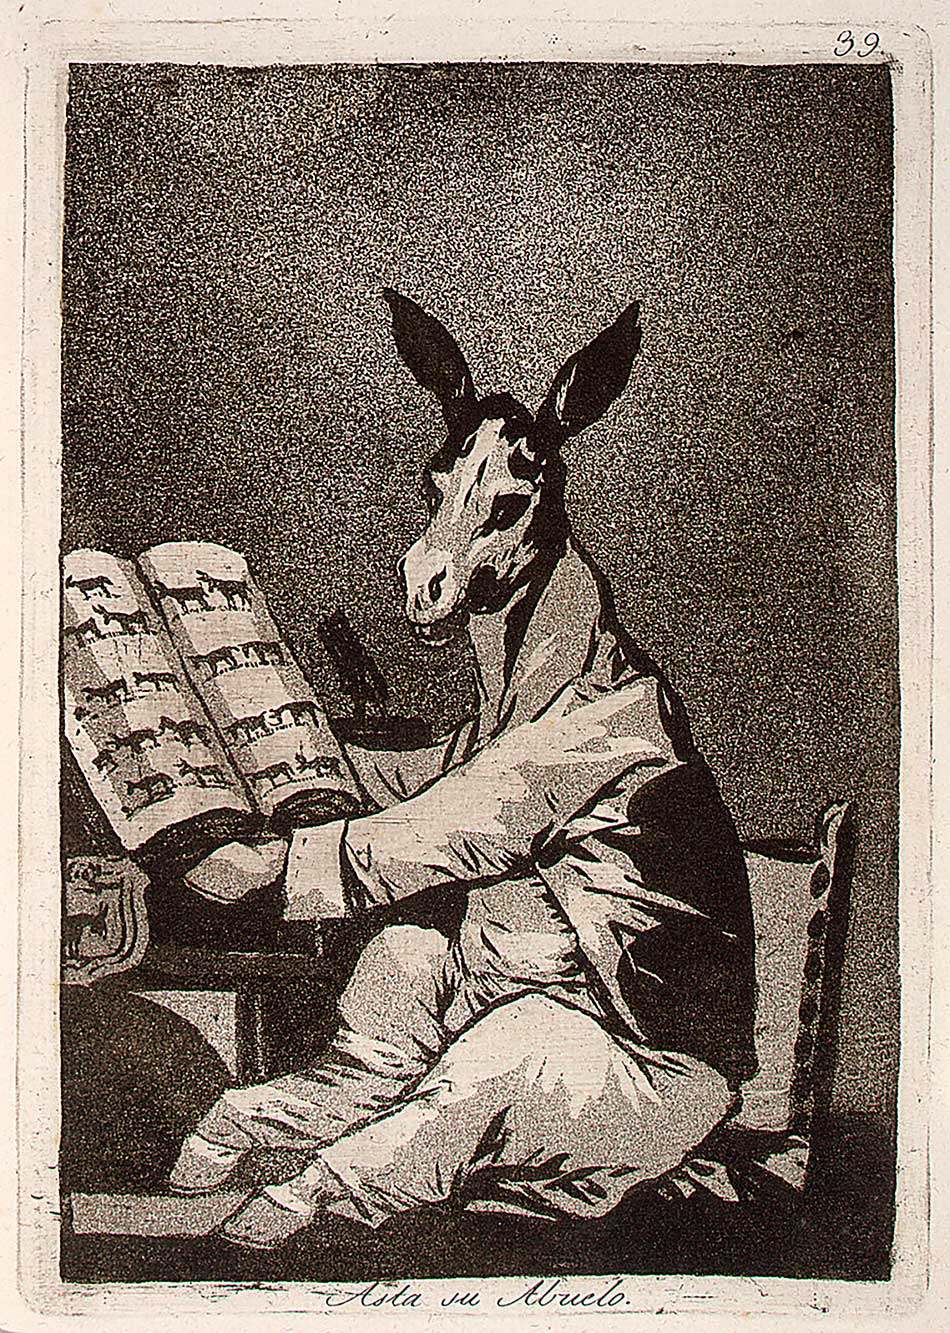 49_-Francisco-de-Goya_Los-caprichos-(first-edition),-published-1799